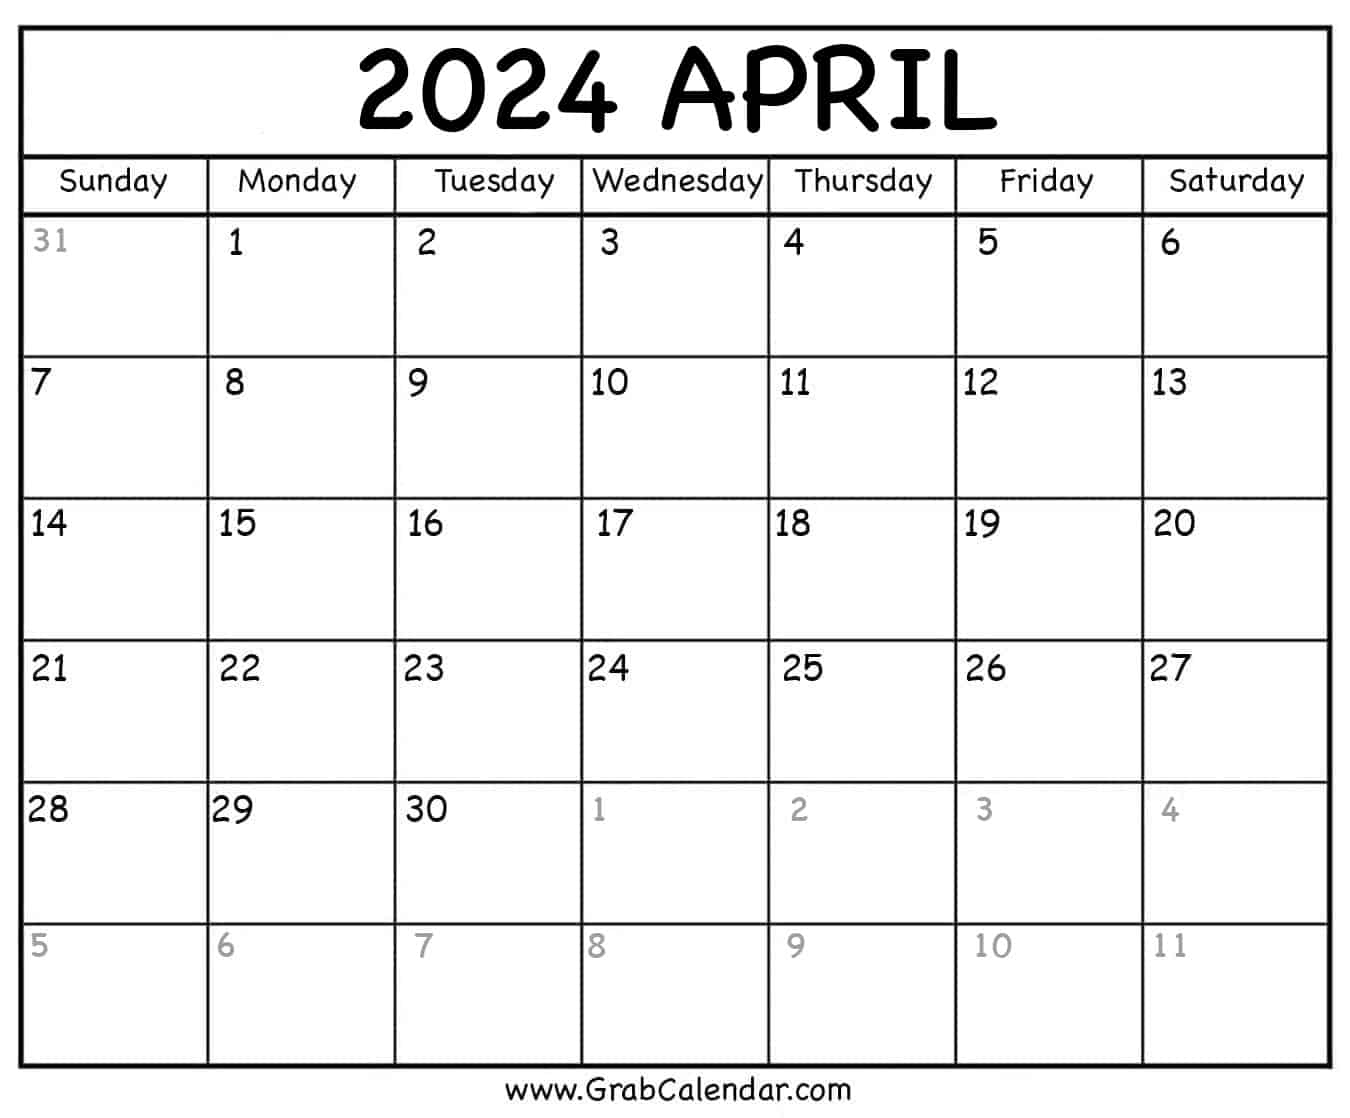 Printable April 2024 Calendar intended for Free Printable April 2024 Easter Calendar